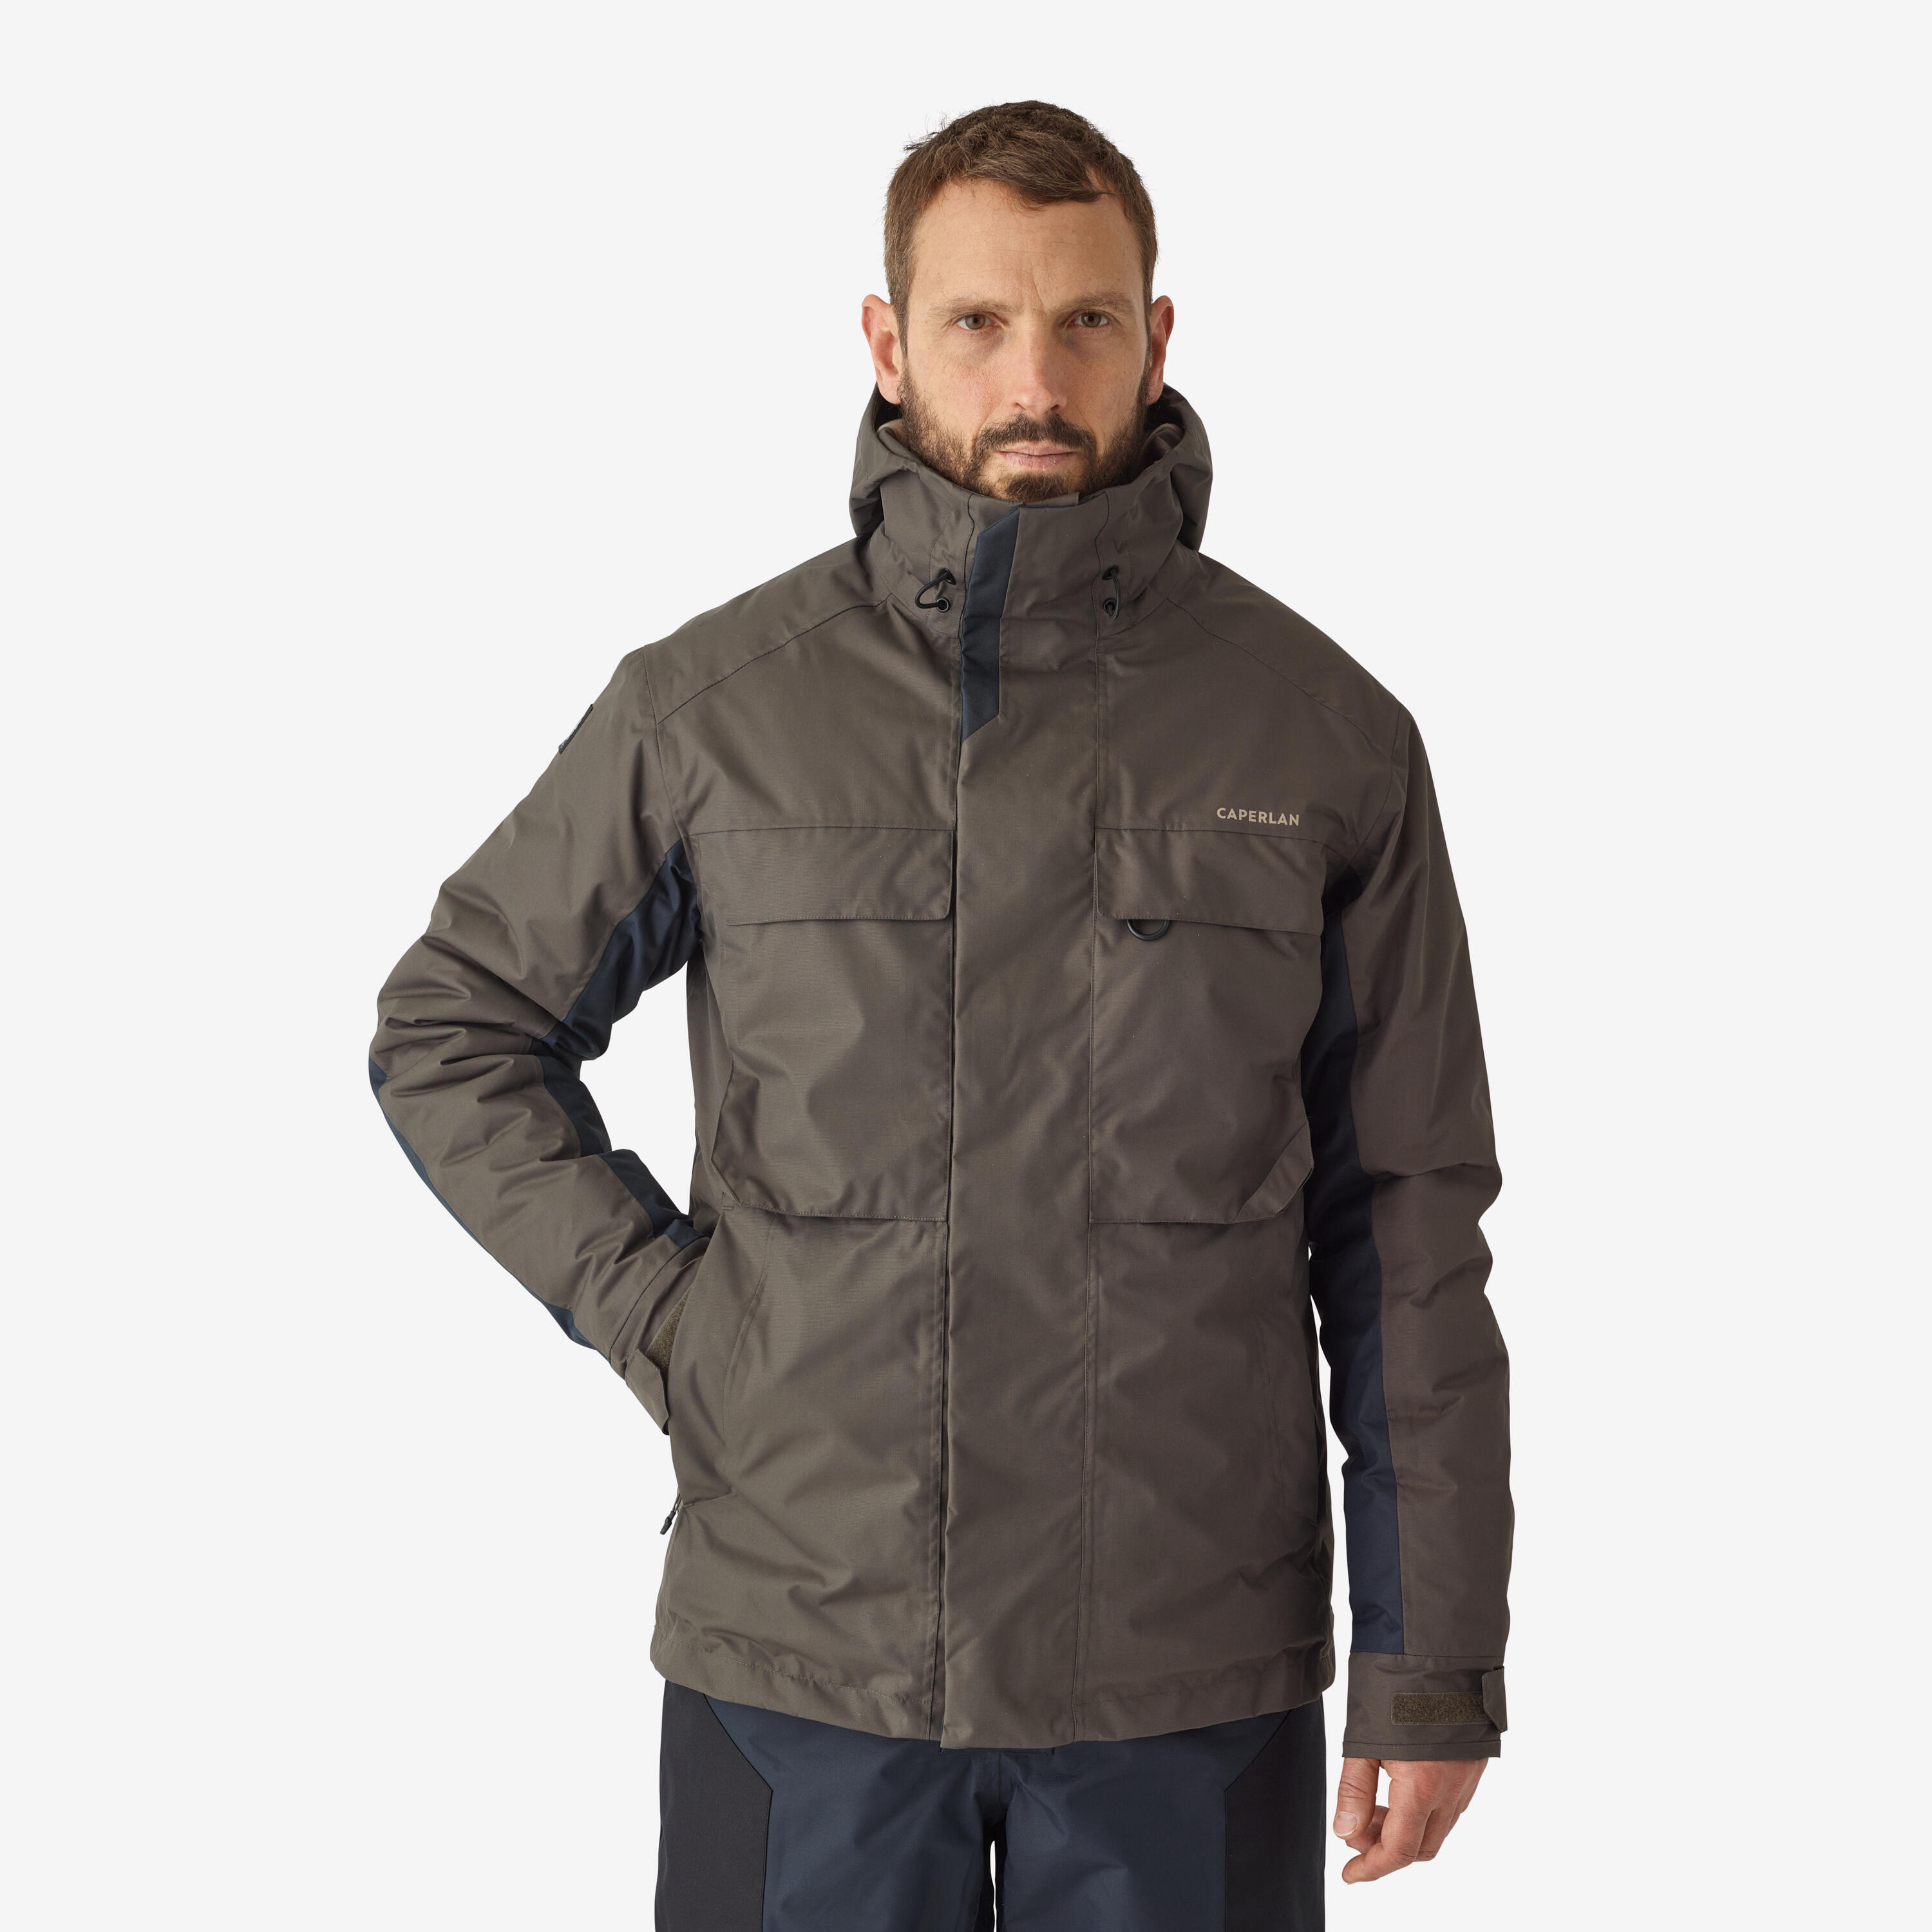 Men's warm waterproof fishing jacket - FJ 500 TH khaki 1/11